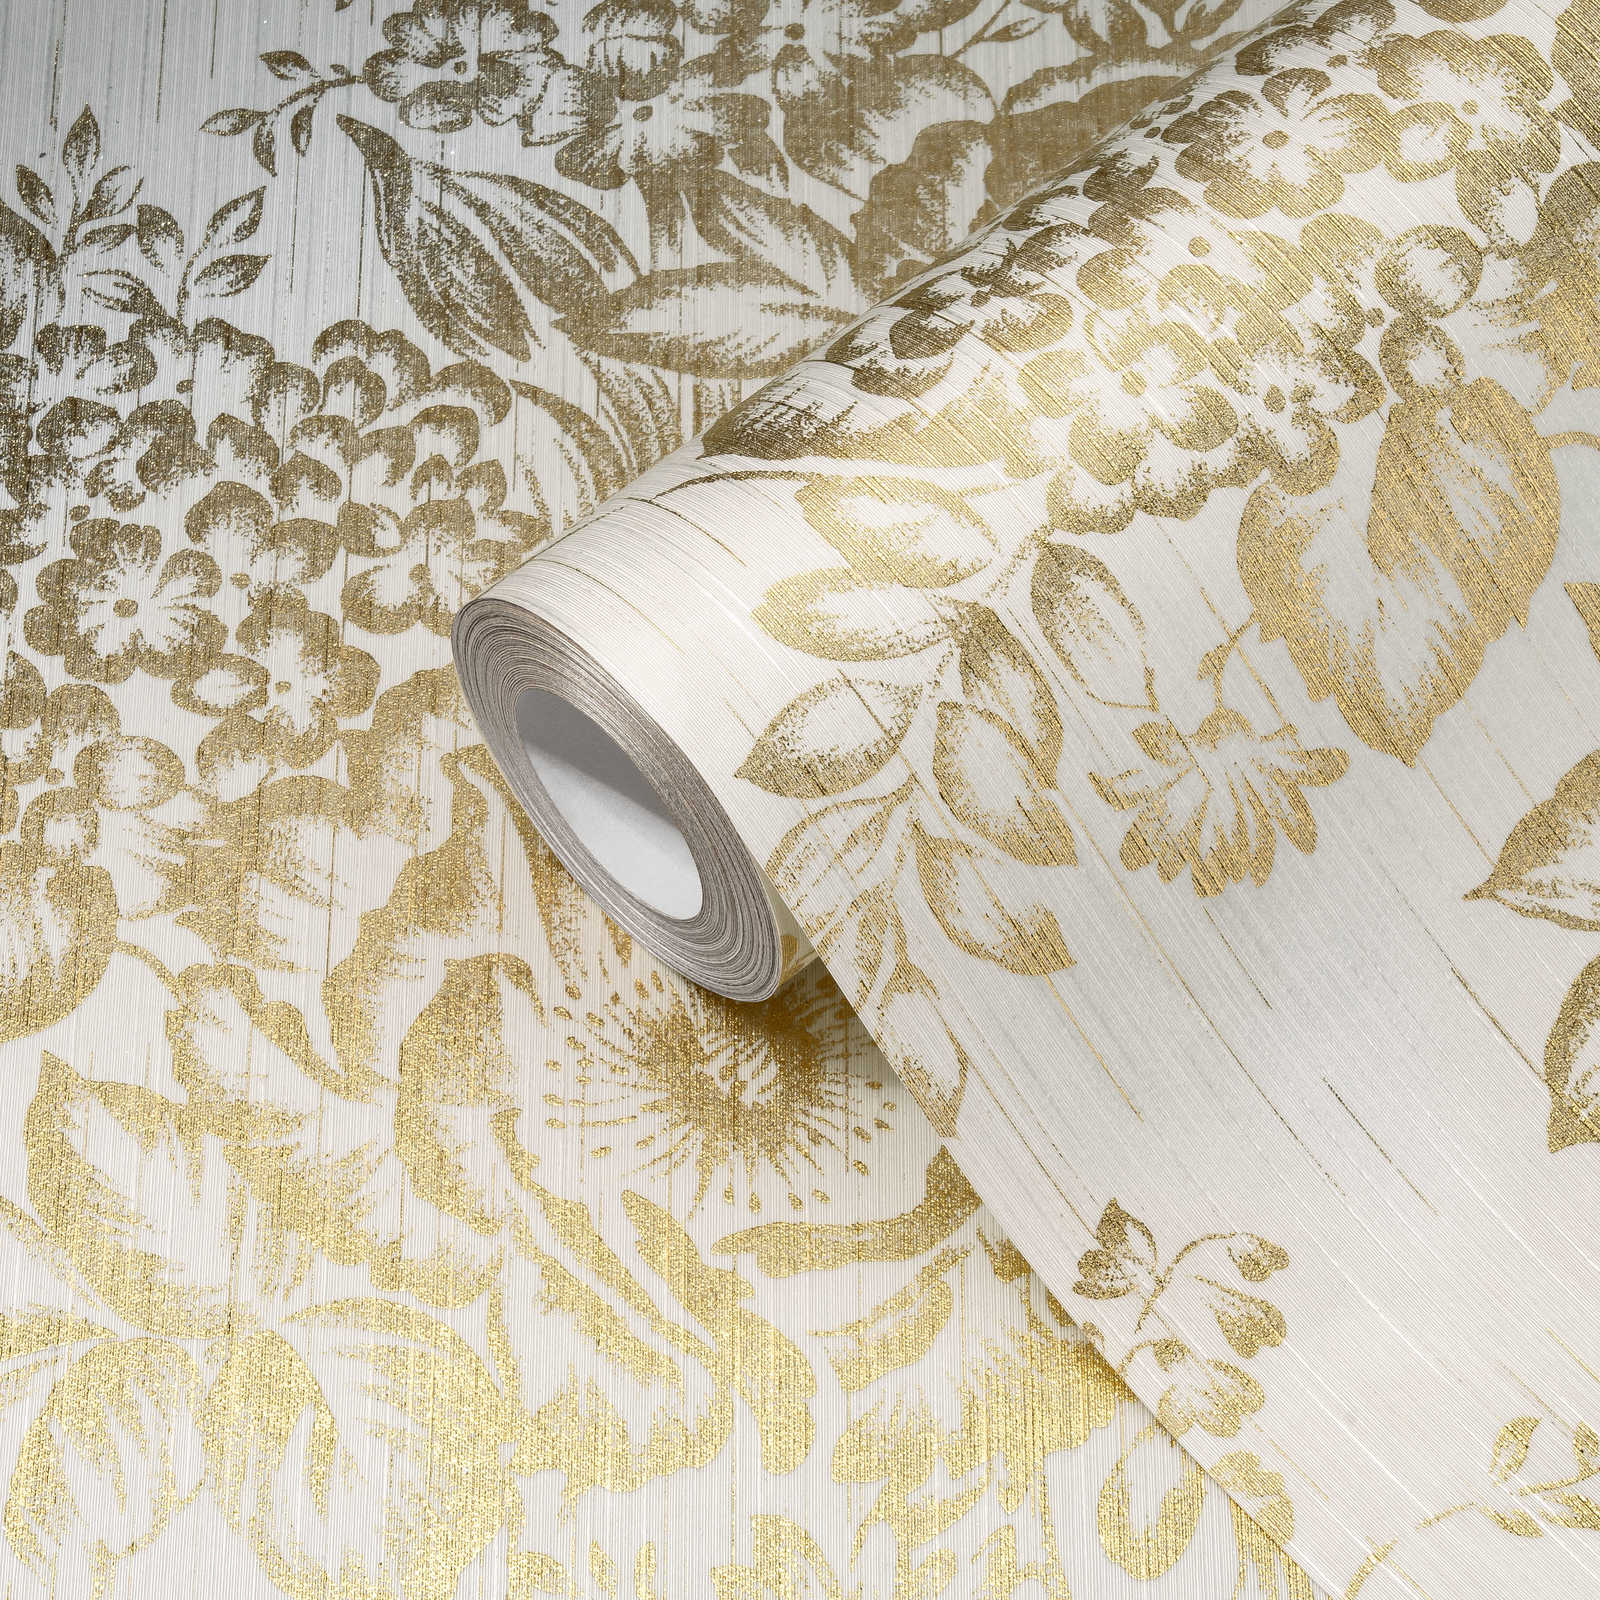             Papel pintado texturizado con motivos florales dorados - oro, blanco
        